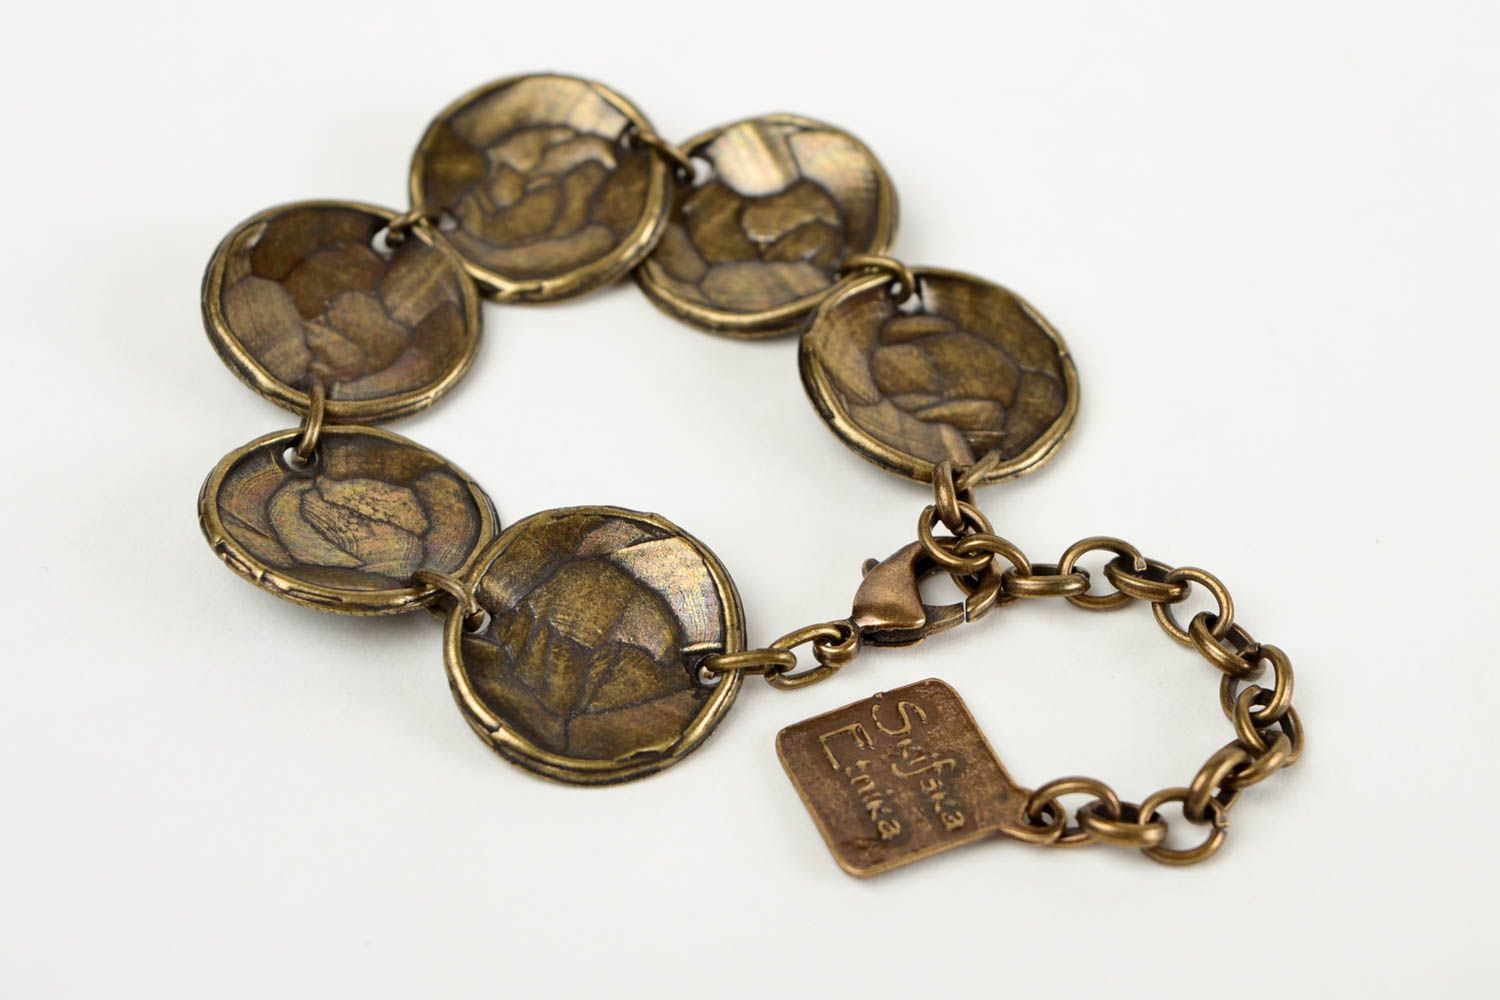 Elite handmade metal bracelet artisan jewelry designs accessories for girls photo 5